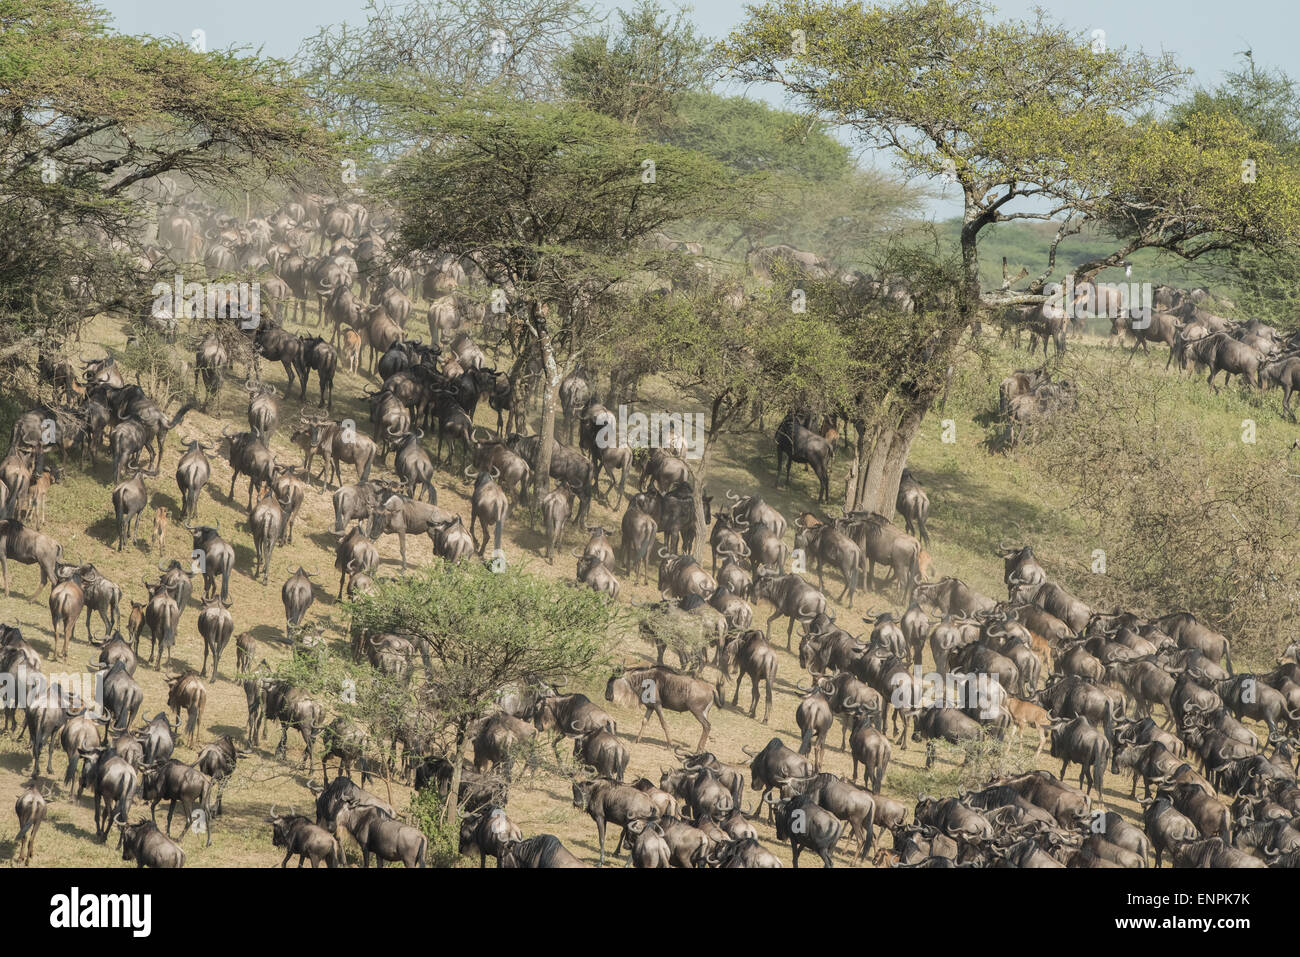 Image of the wildebeest migration, Tanzania. Stock Photo